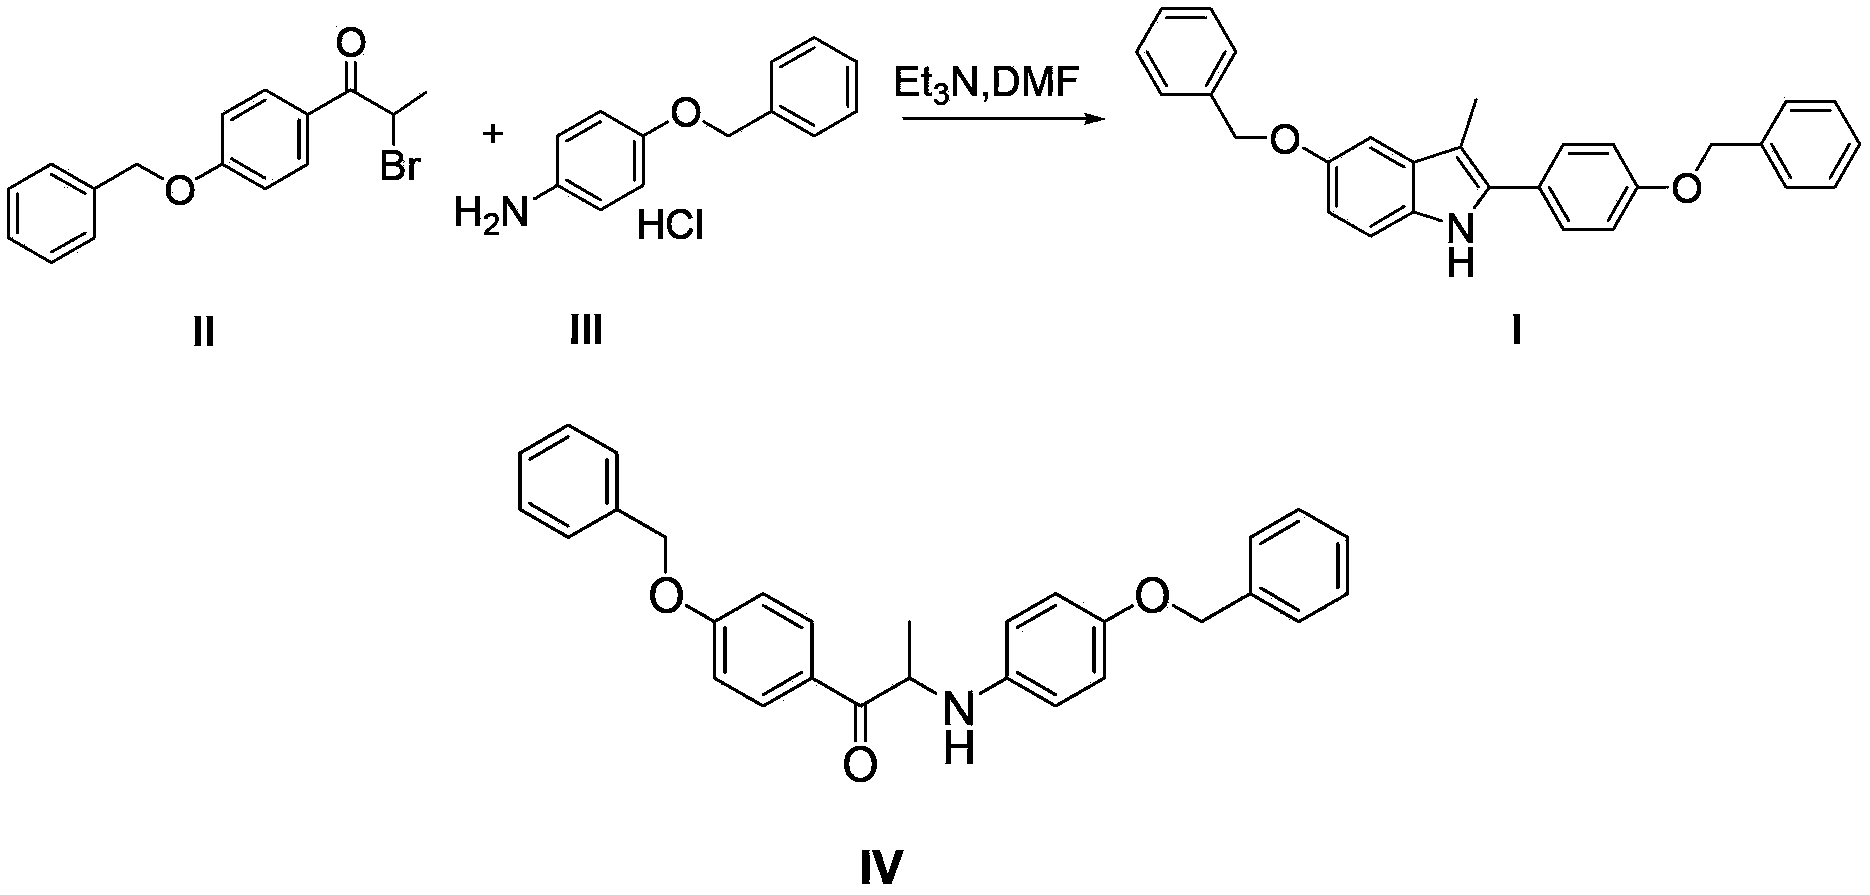 Preparation method for 5-benzyloxy-2-(4-benzyloxyphenyl)-3-methyl-1H-indole